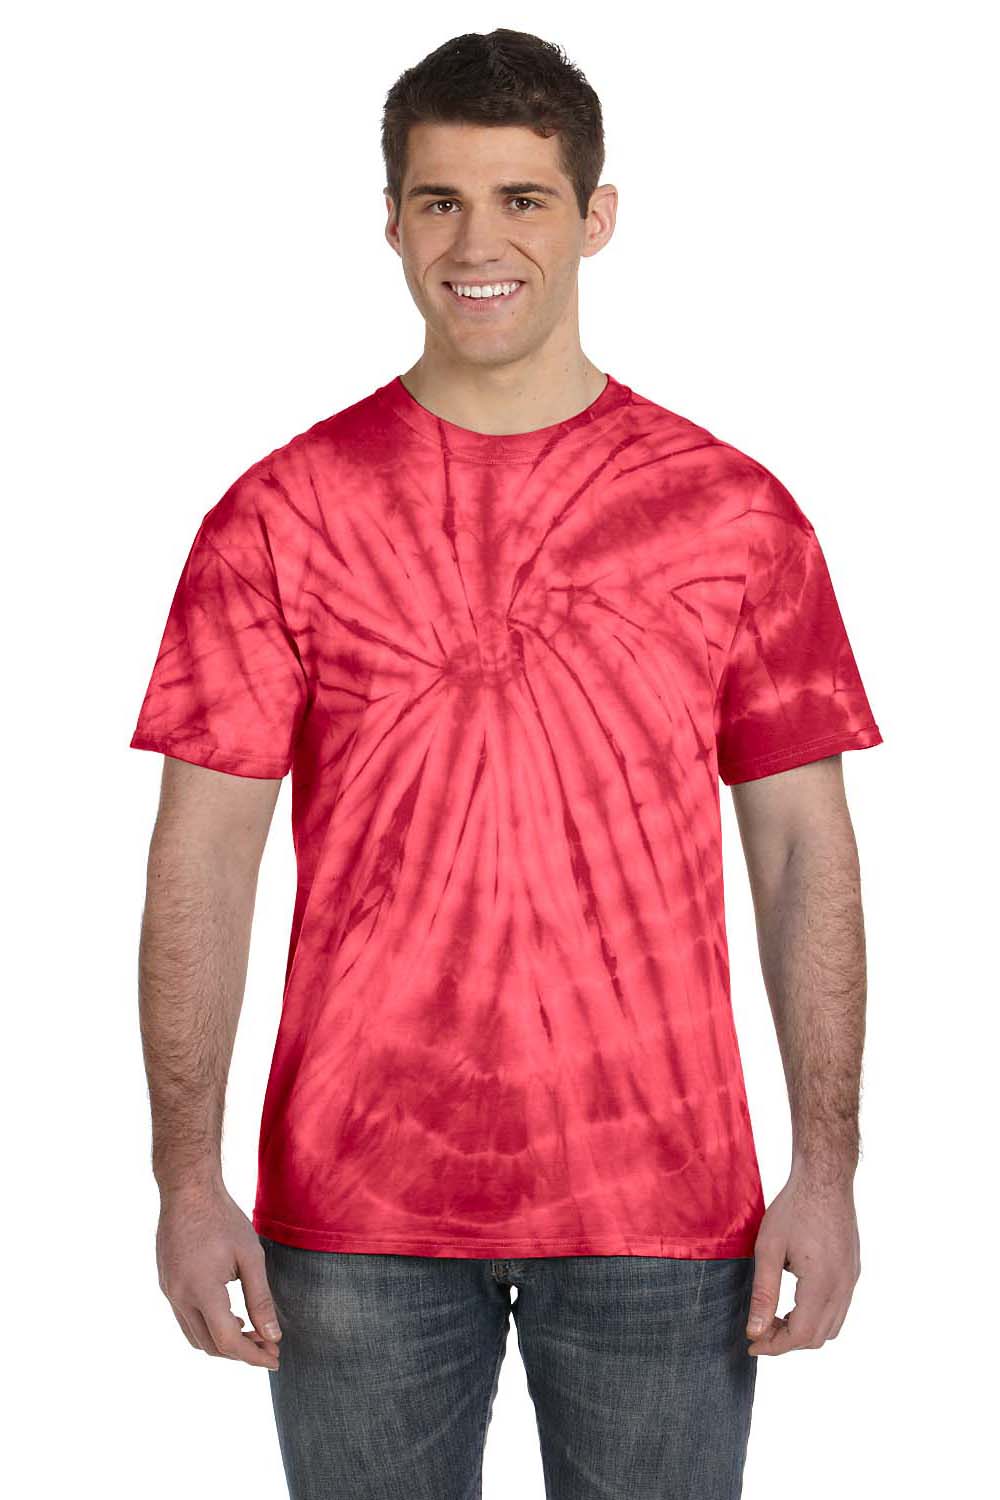 Tie-Dye CD101 Mens Short Sleeve Crewneck T-Shirt Red Front